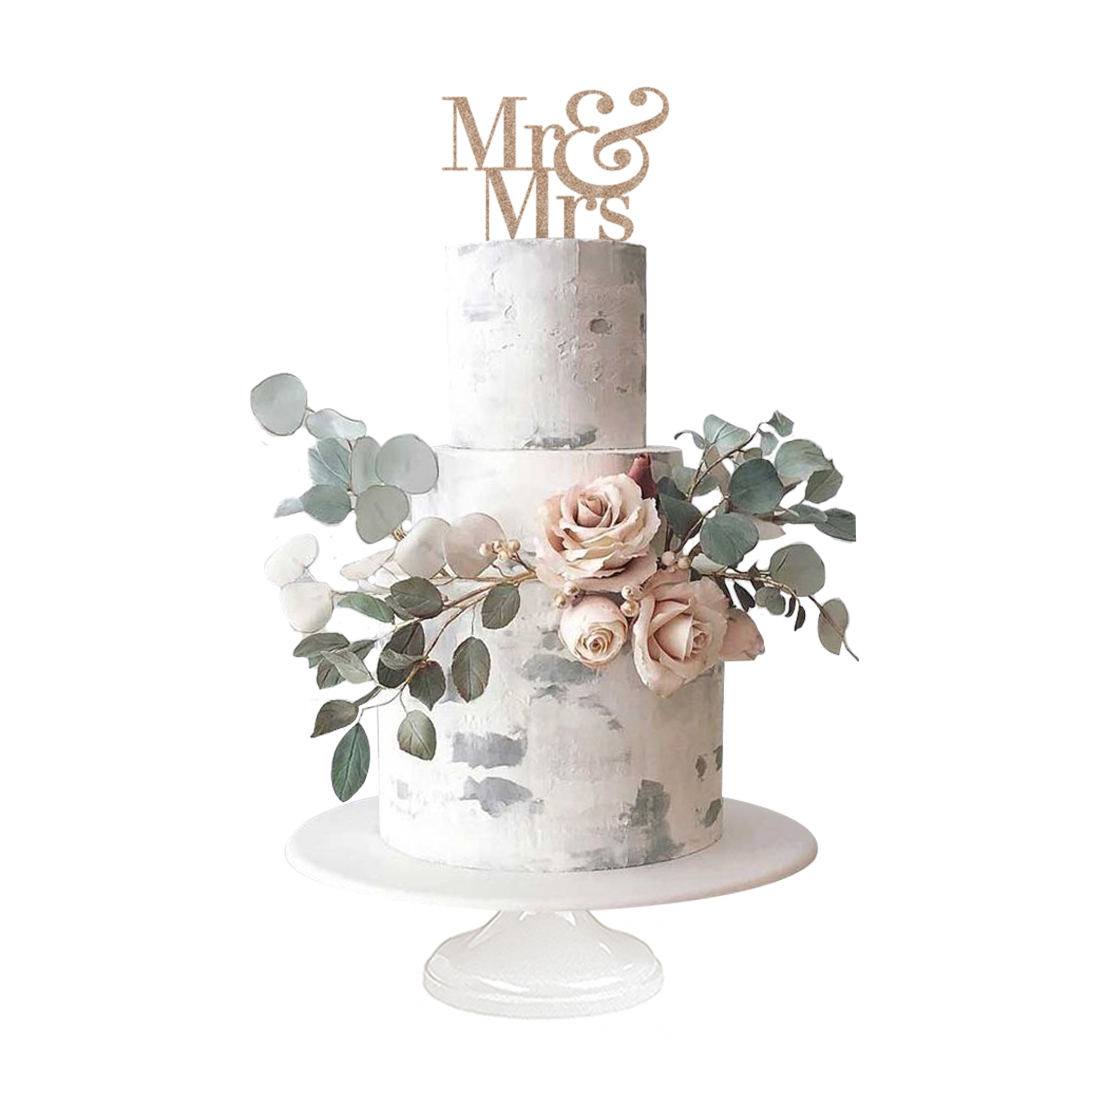 Mr & Mrs Cake, pastel con decoración floral comestible para boda